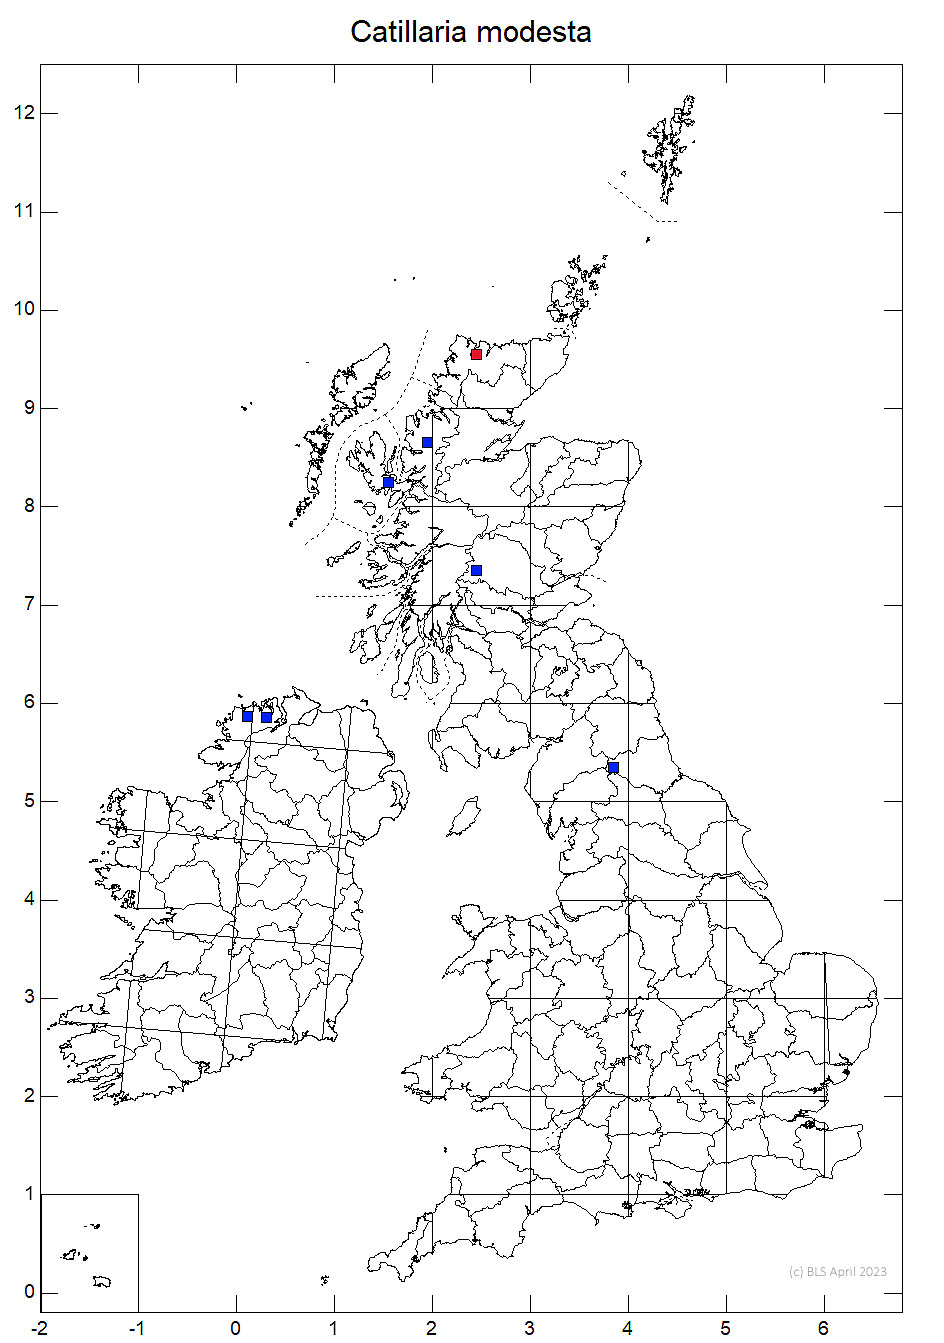 Catillaria modesta 10km sq distribution map